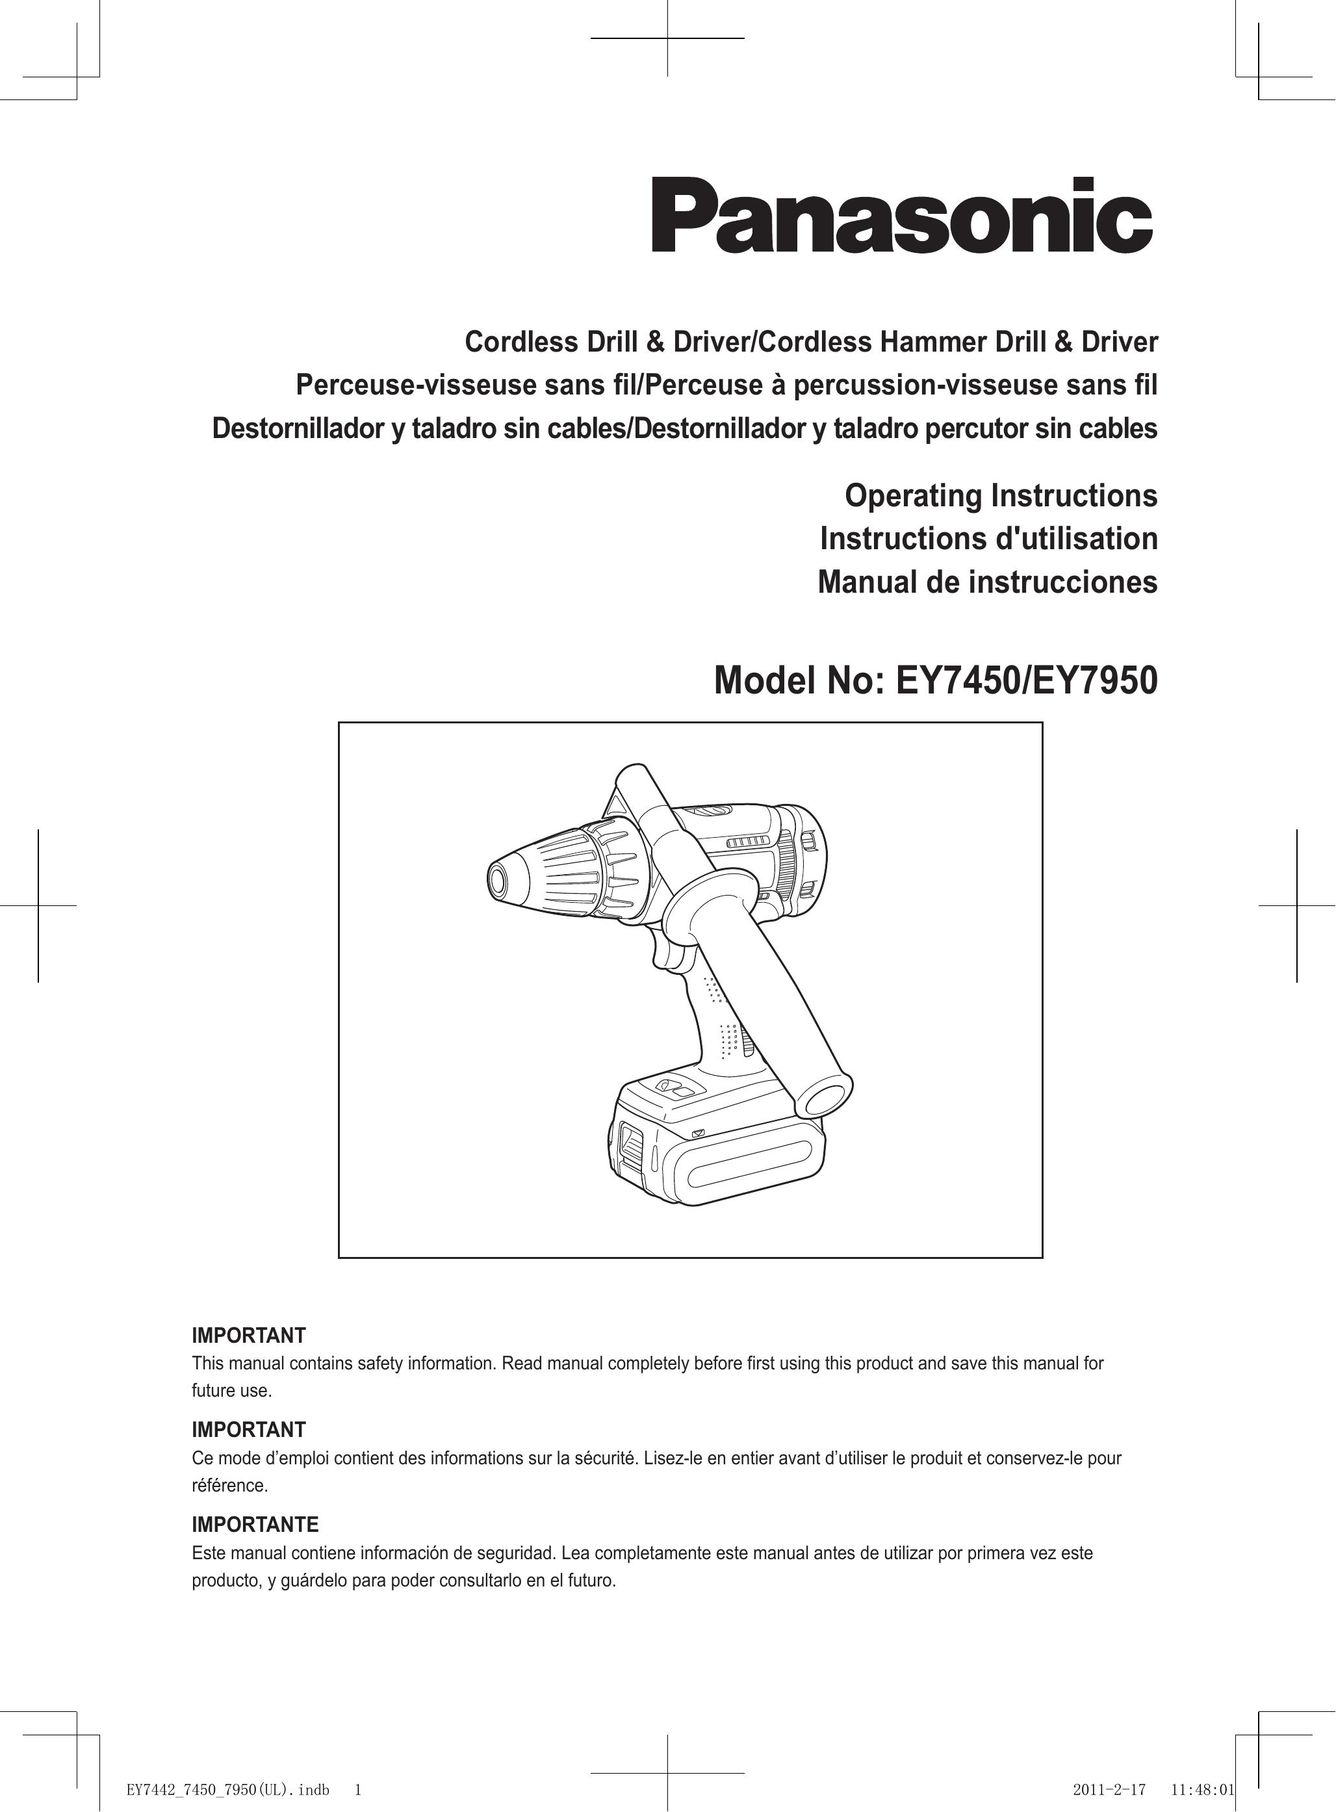 Panasonic EY7450 Cordless Drill User Manual